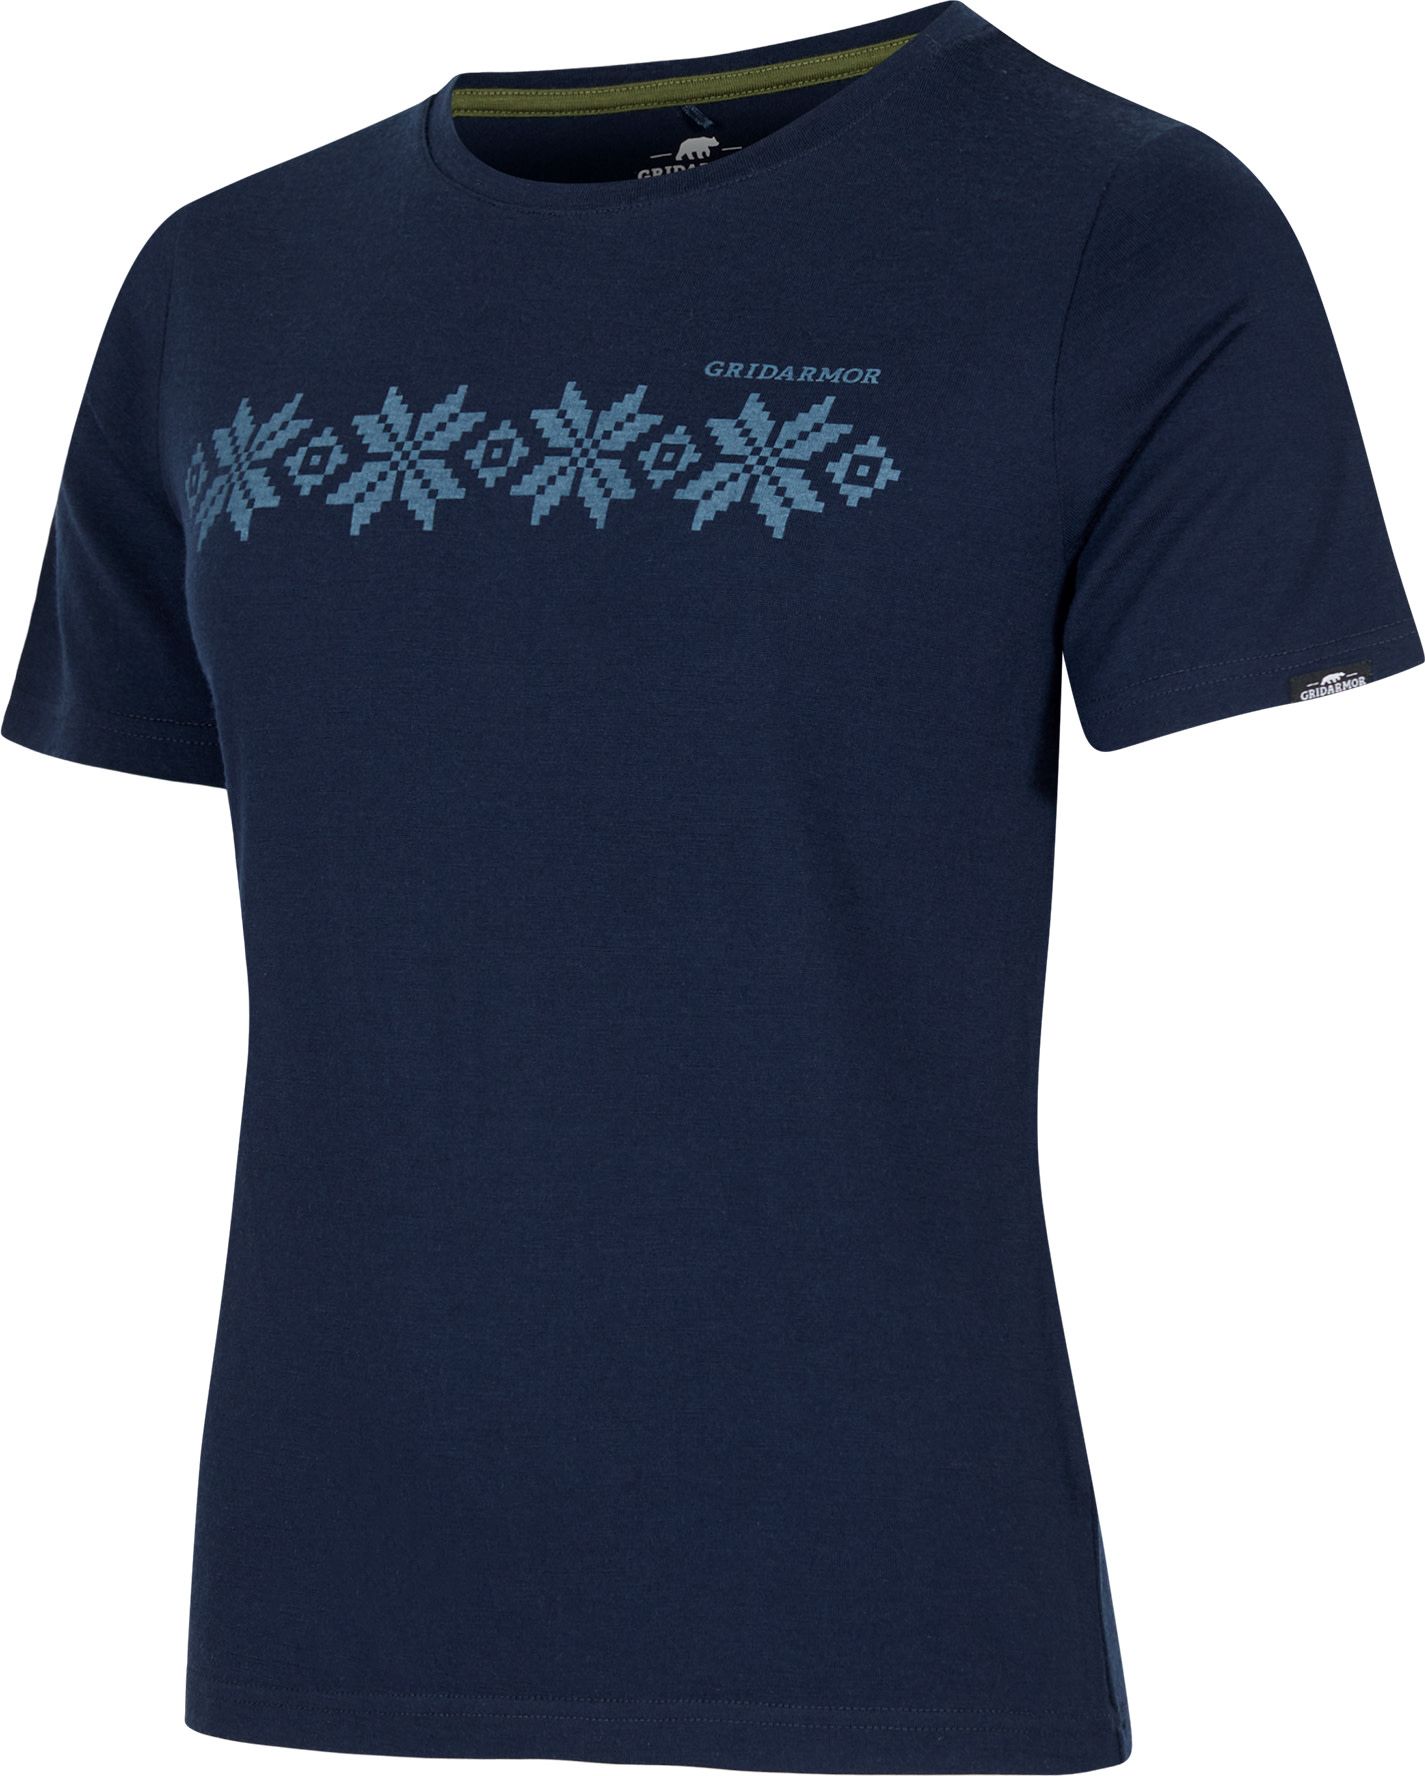 Women's Larsnes Merino T-Shirt Navyblazer